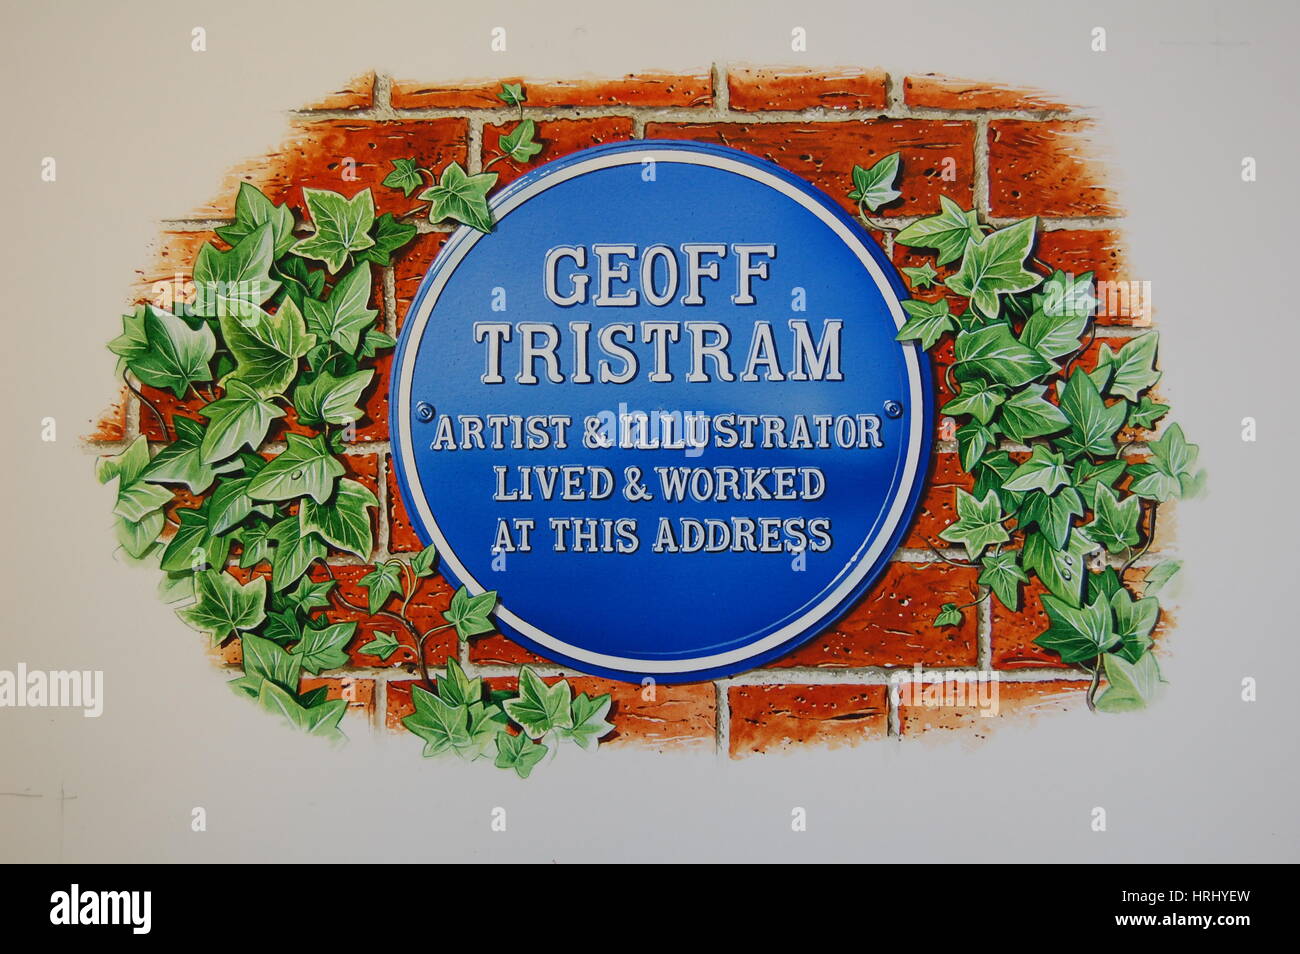 Geoff Tristram's Artwork and Illustrations Stock Photo